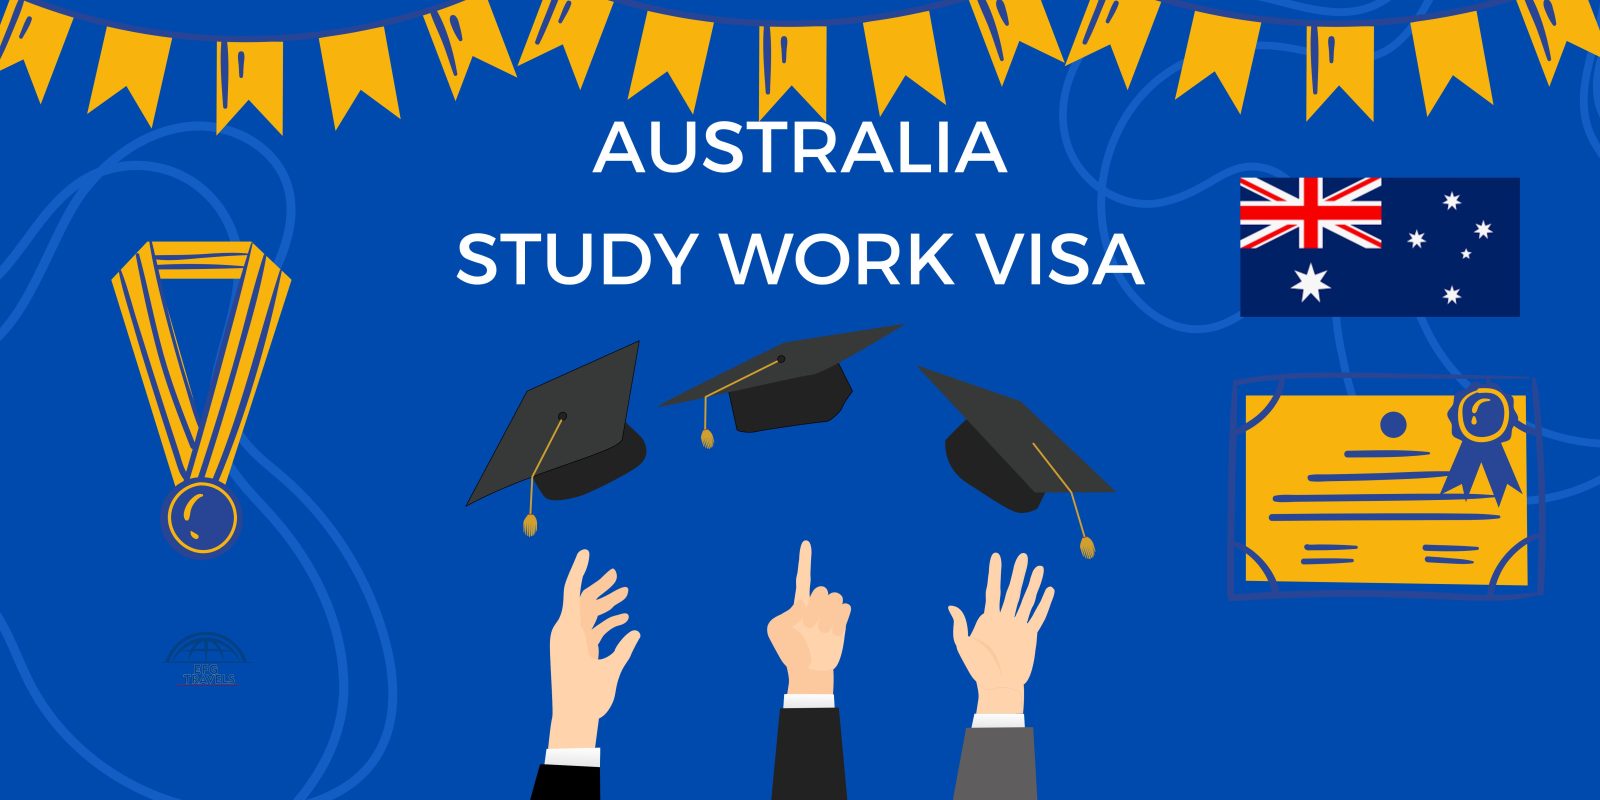 Australia provides international students with a six-year work visa.